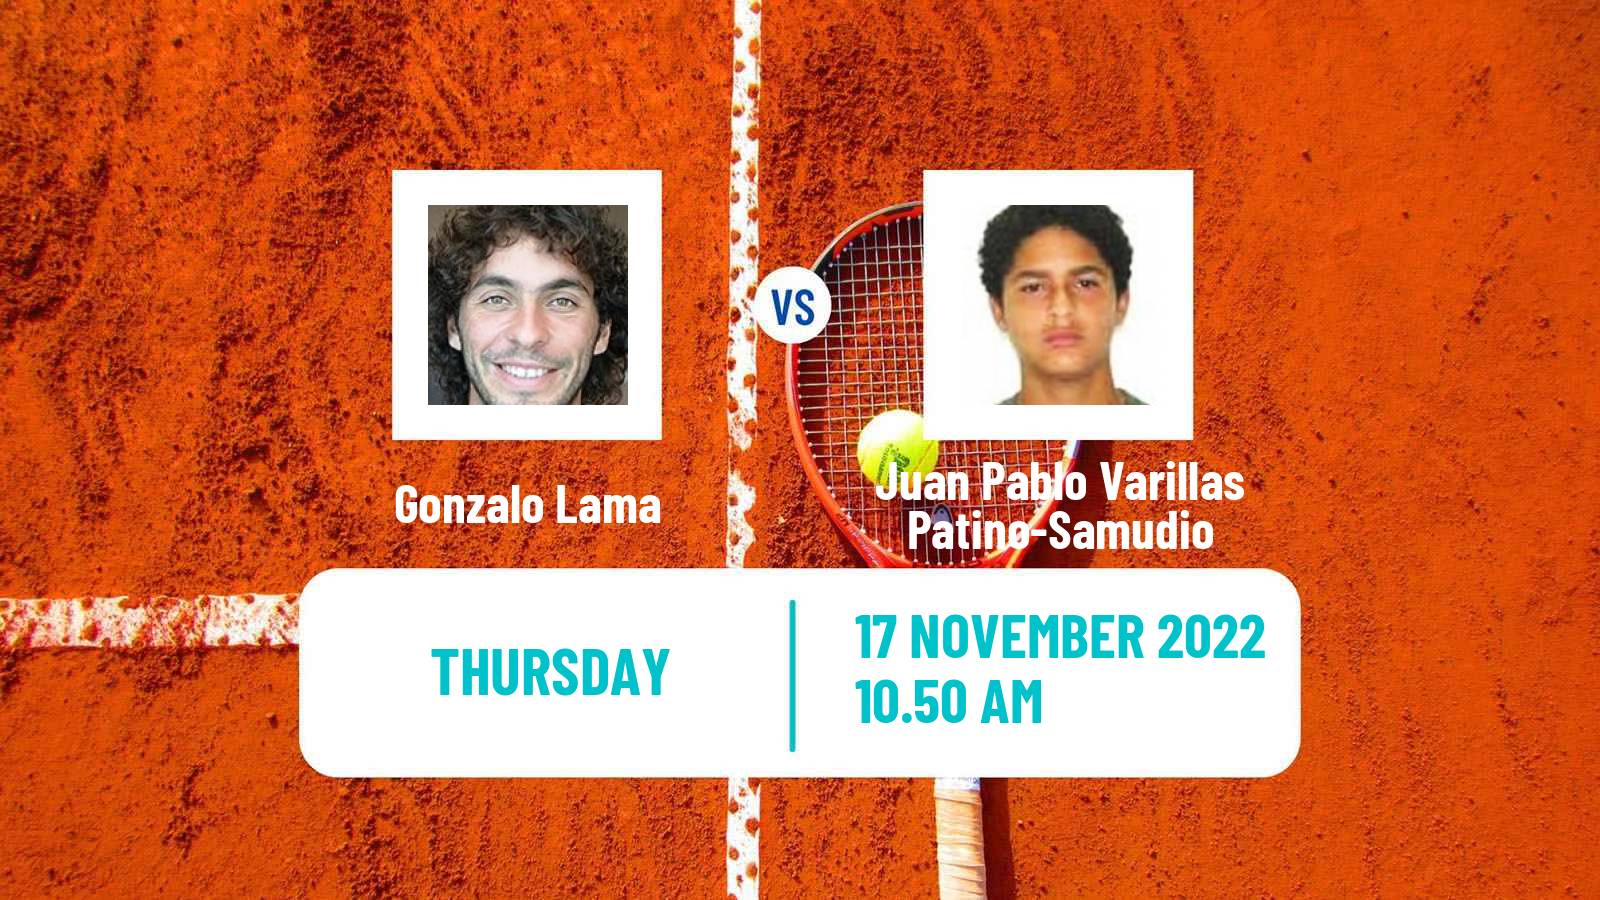 Tennis ATP Challenger Gonzalo Lama - Juan Pablo Varillas Patino-Samudio